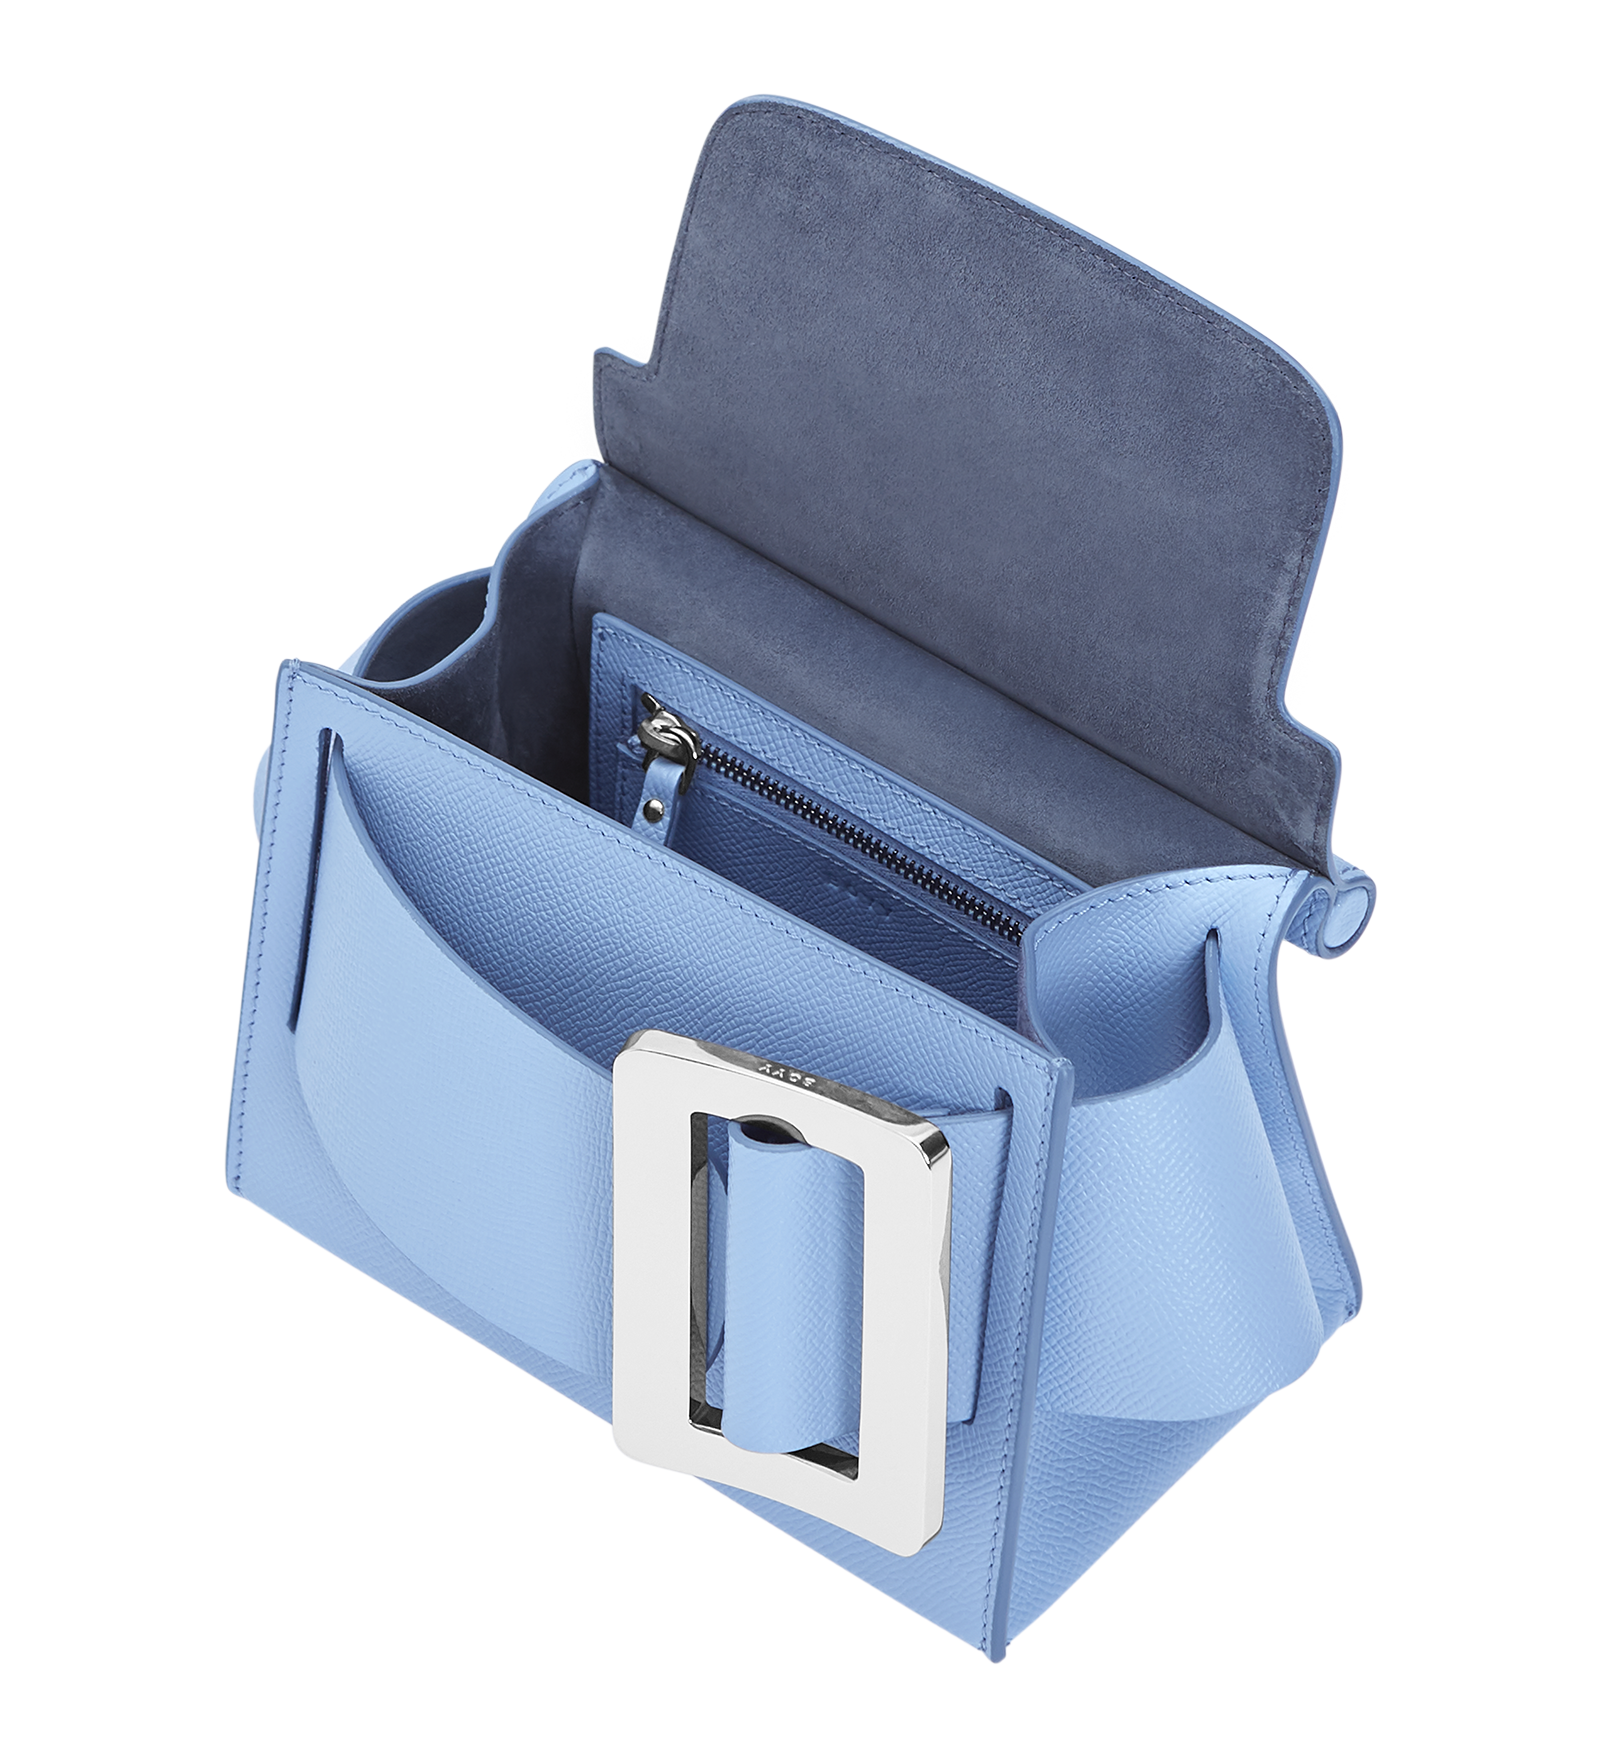 Boyy 'karl 19' Handbag in Blue